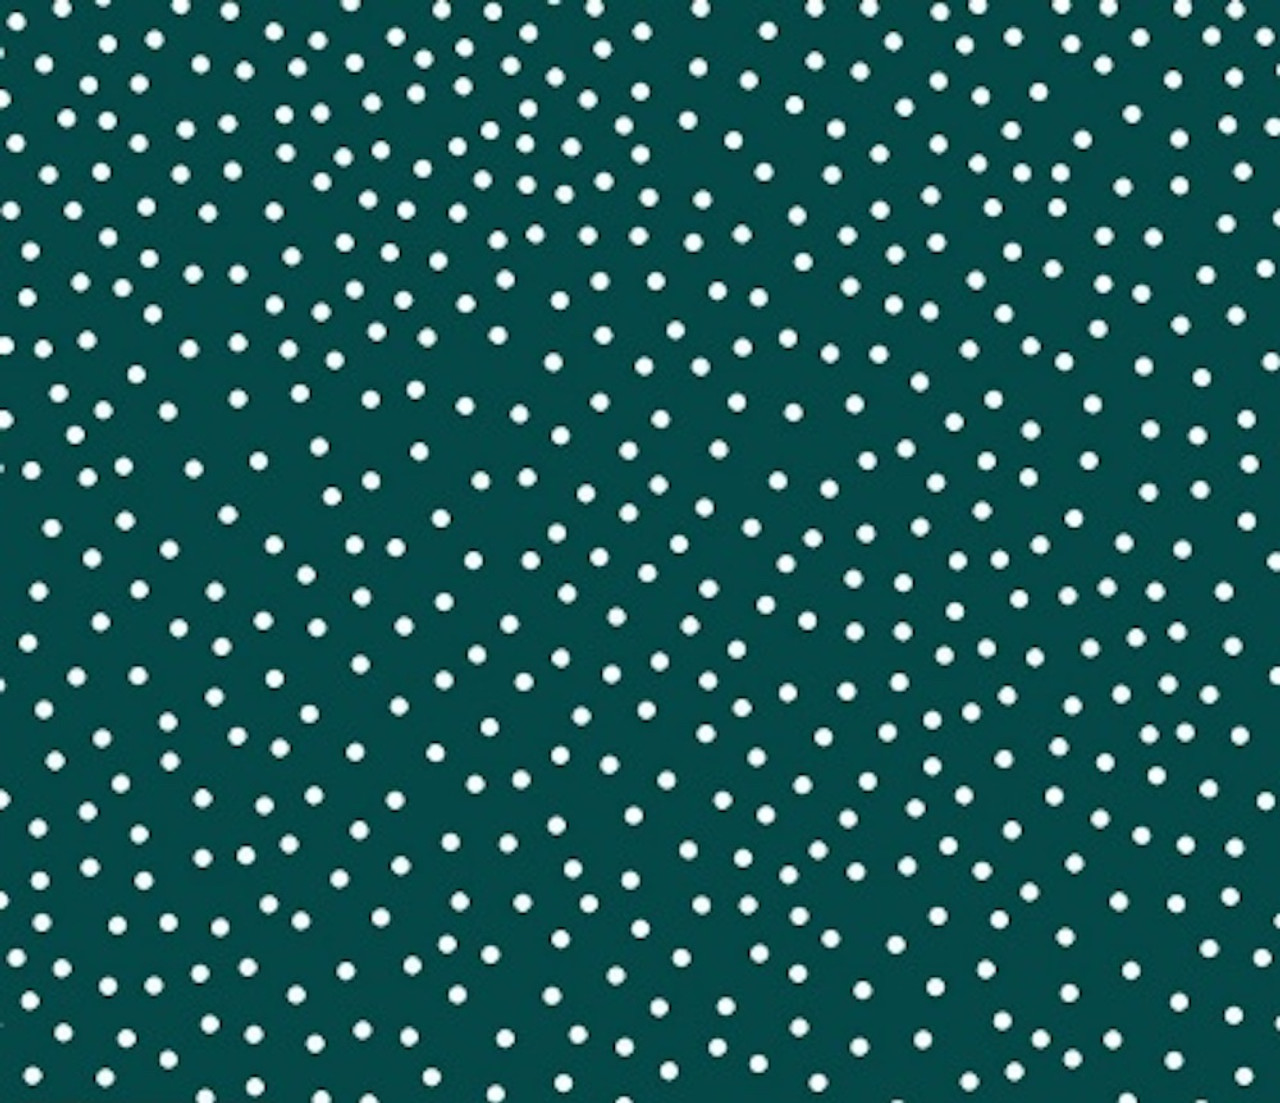 Stof Fabrics 4512-435 Dot Mania Mini Polka Dot Dk Teal Cotton Fabric By The Yard